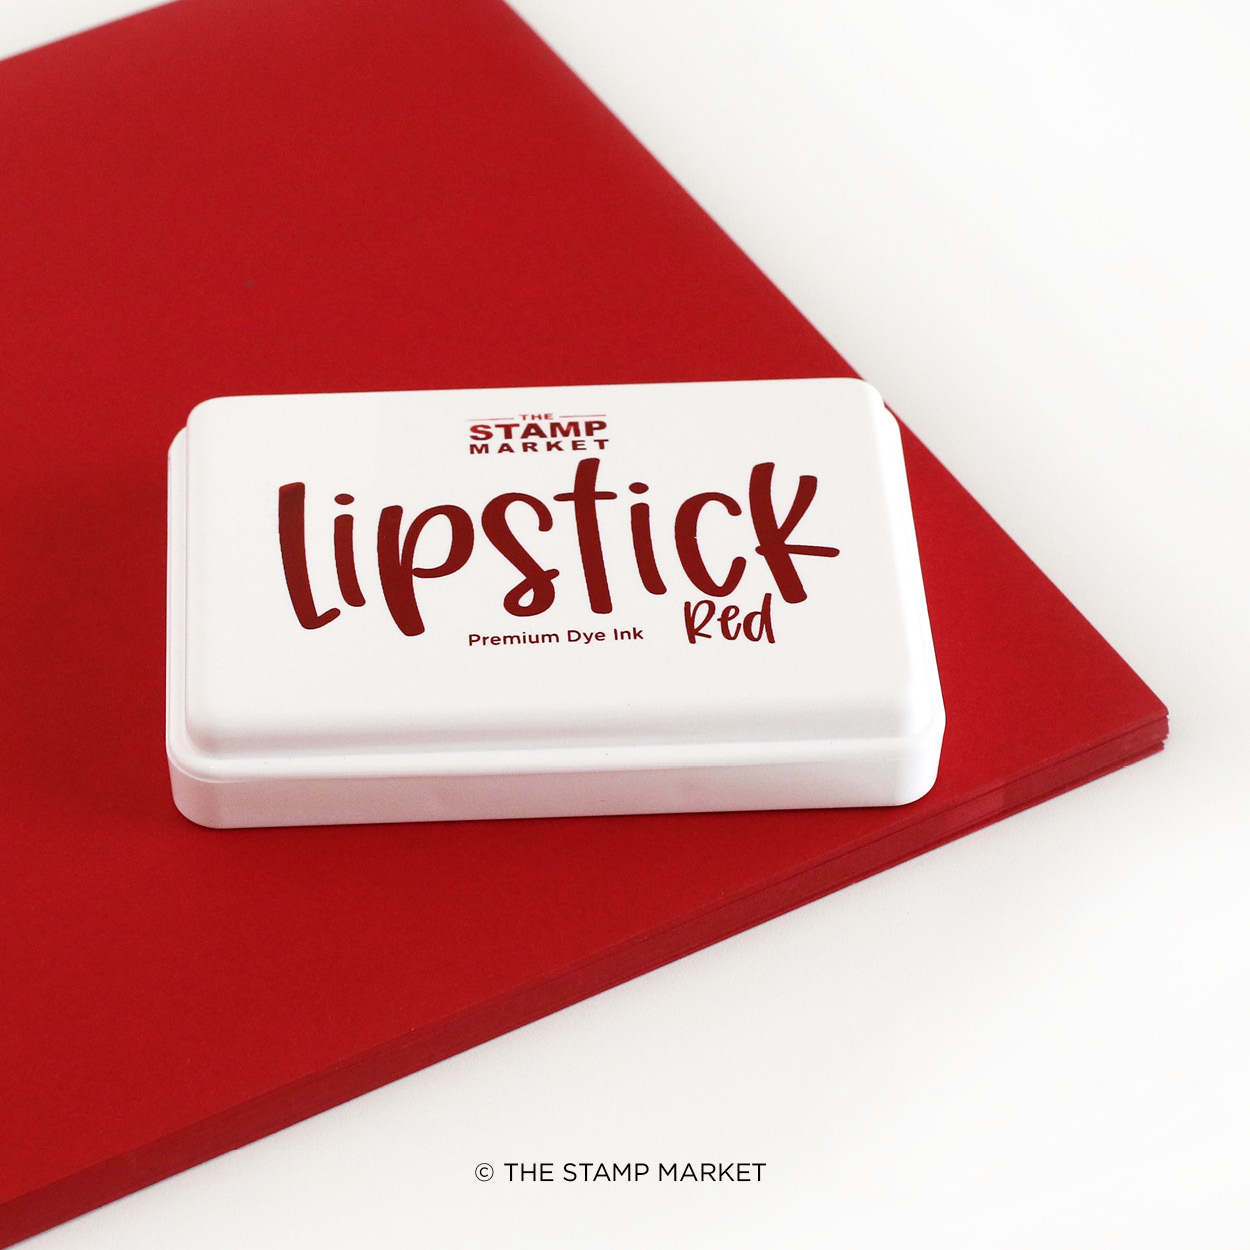 Lipstick Red - 8.5"x11" - Cardstock